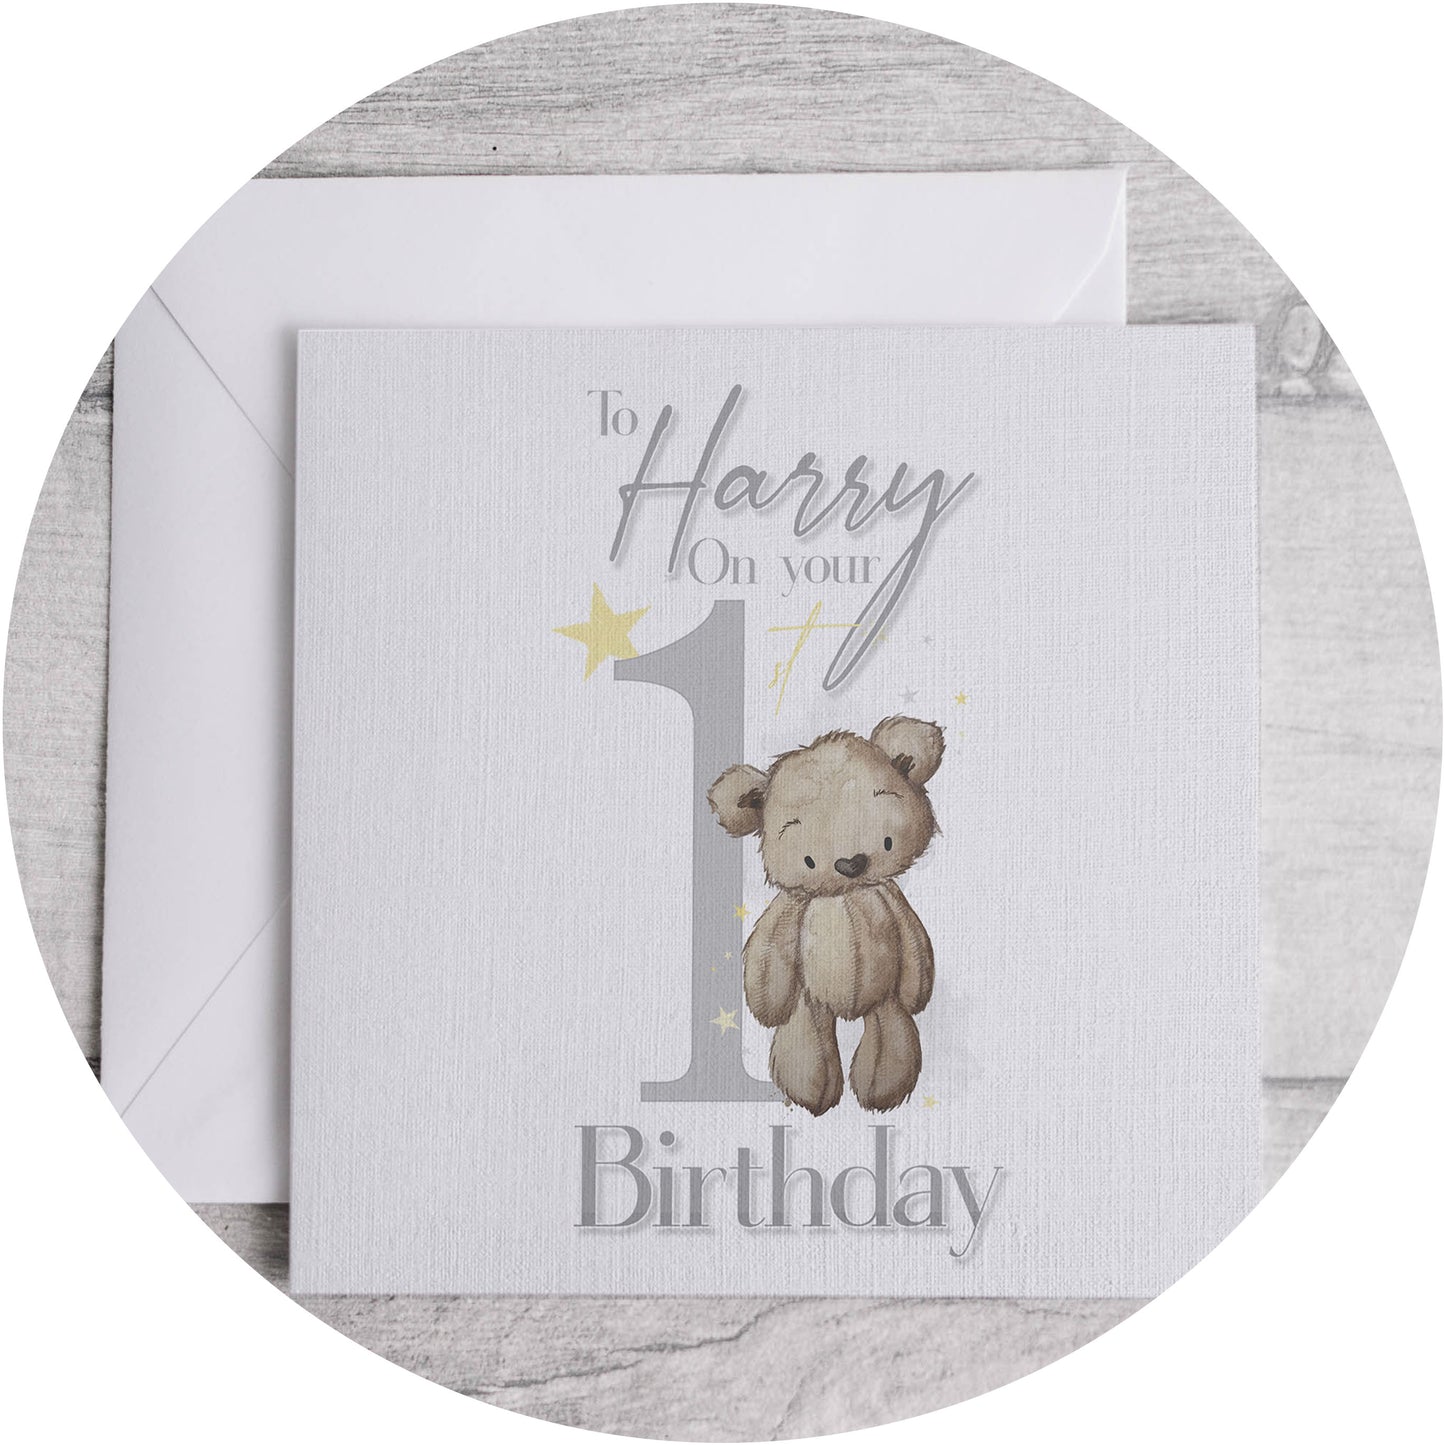 Brown Bear Birthday Card - 1st, 2nd or 3rd Birthday